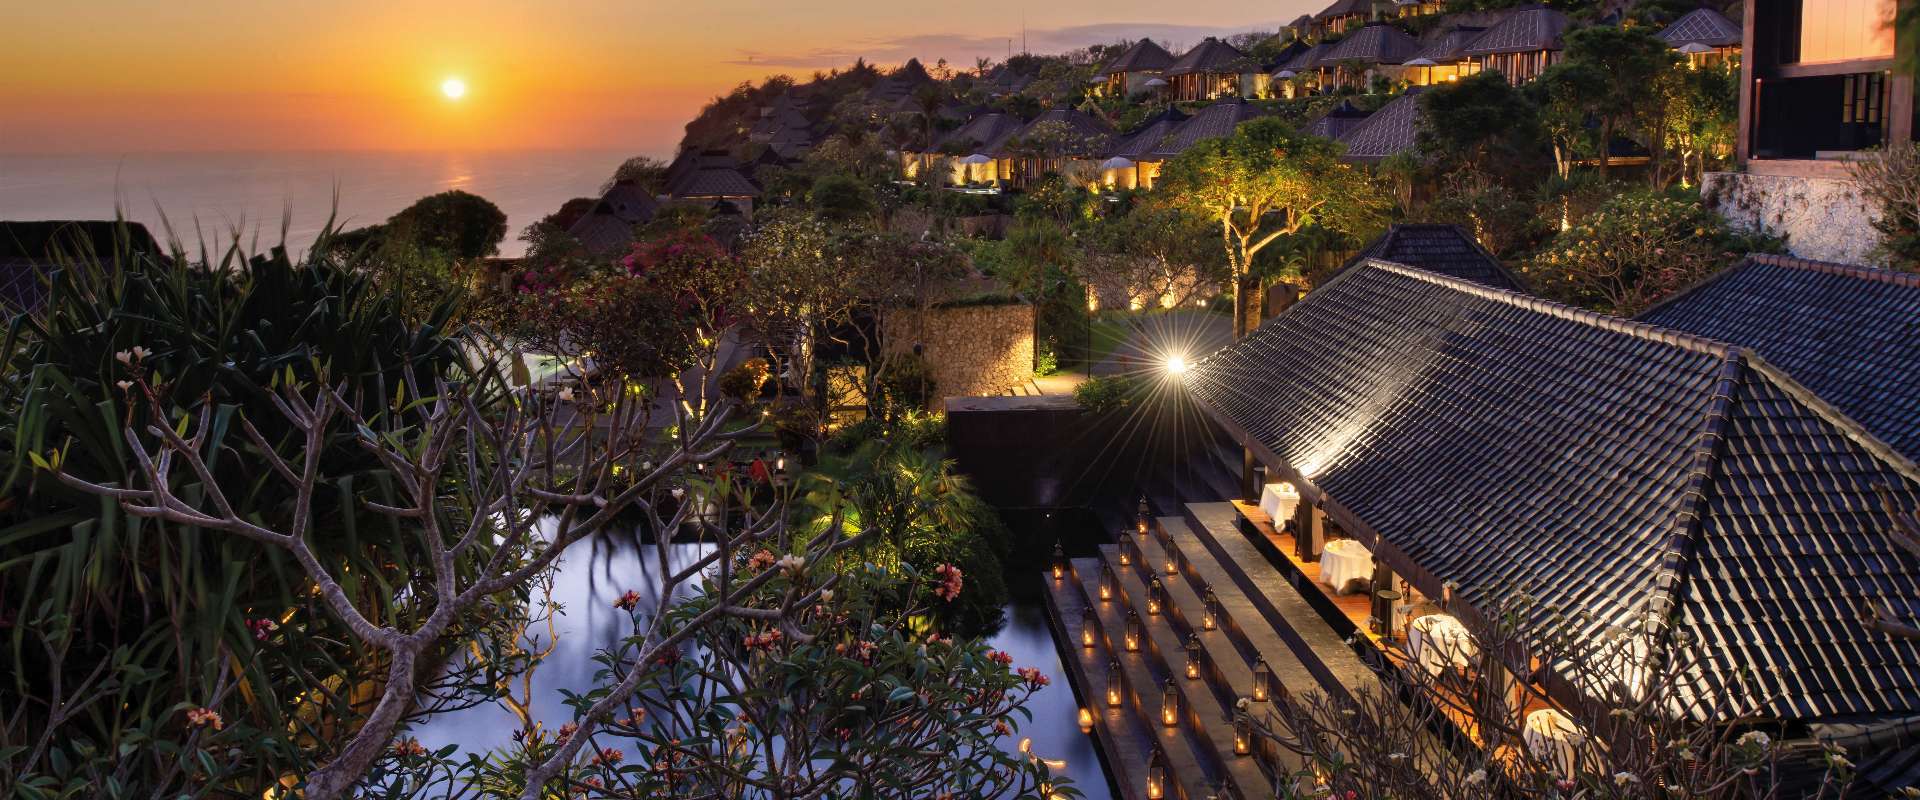 Bulgari Resort showcases the beauty of Bali’s culture and environment